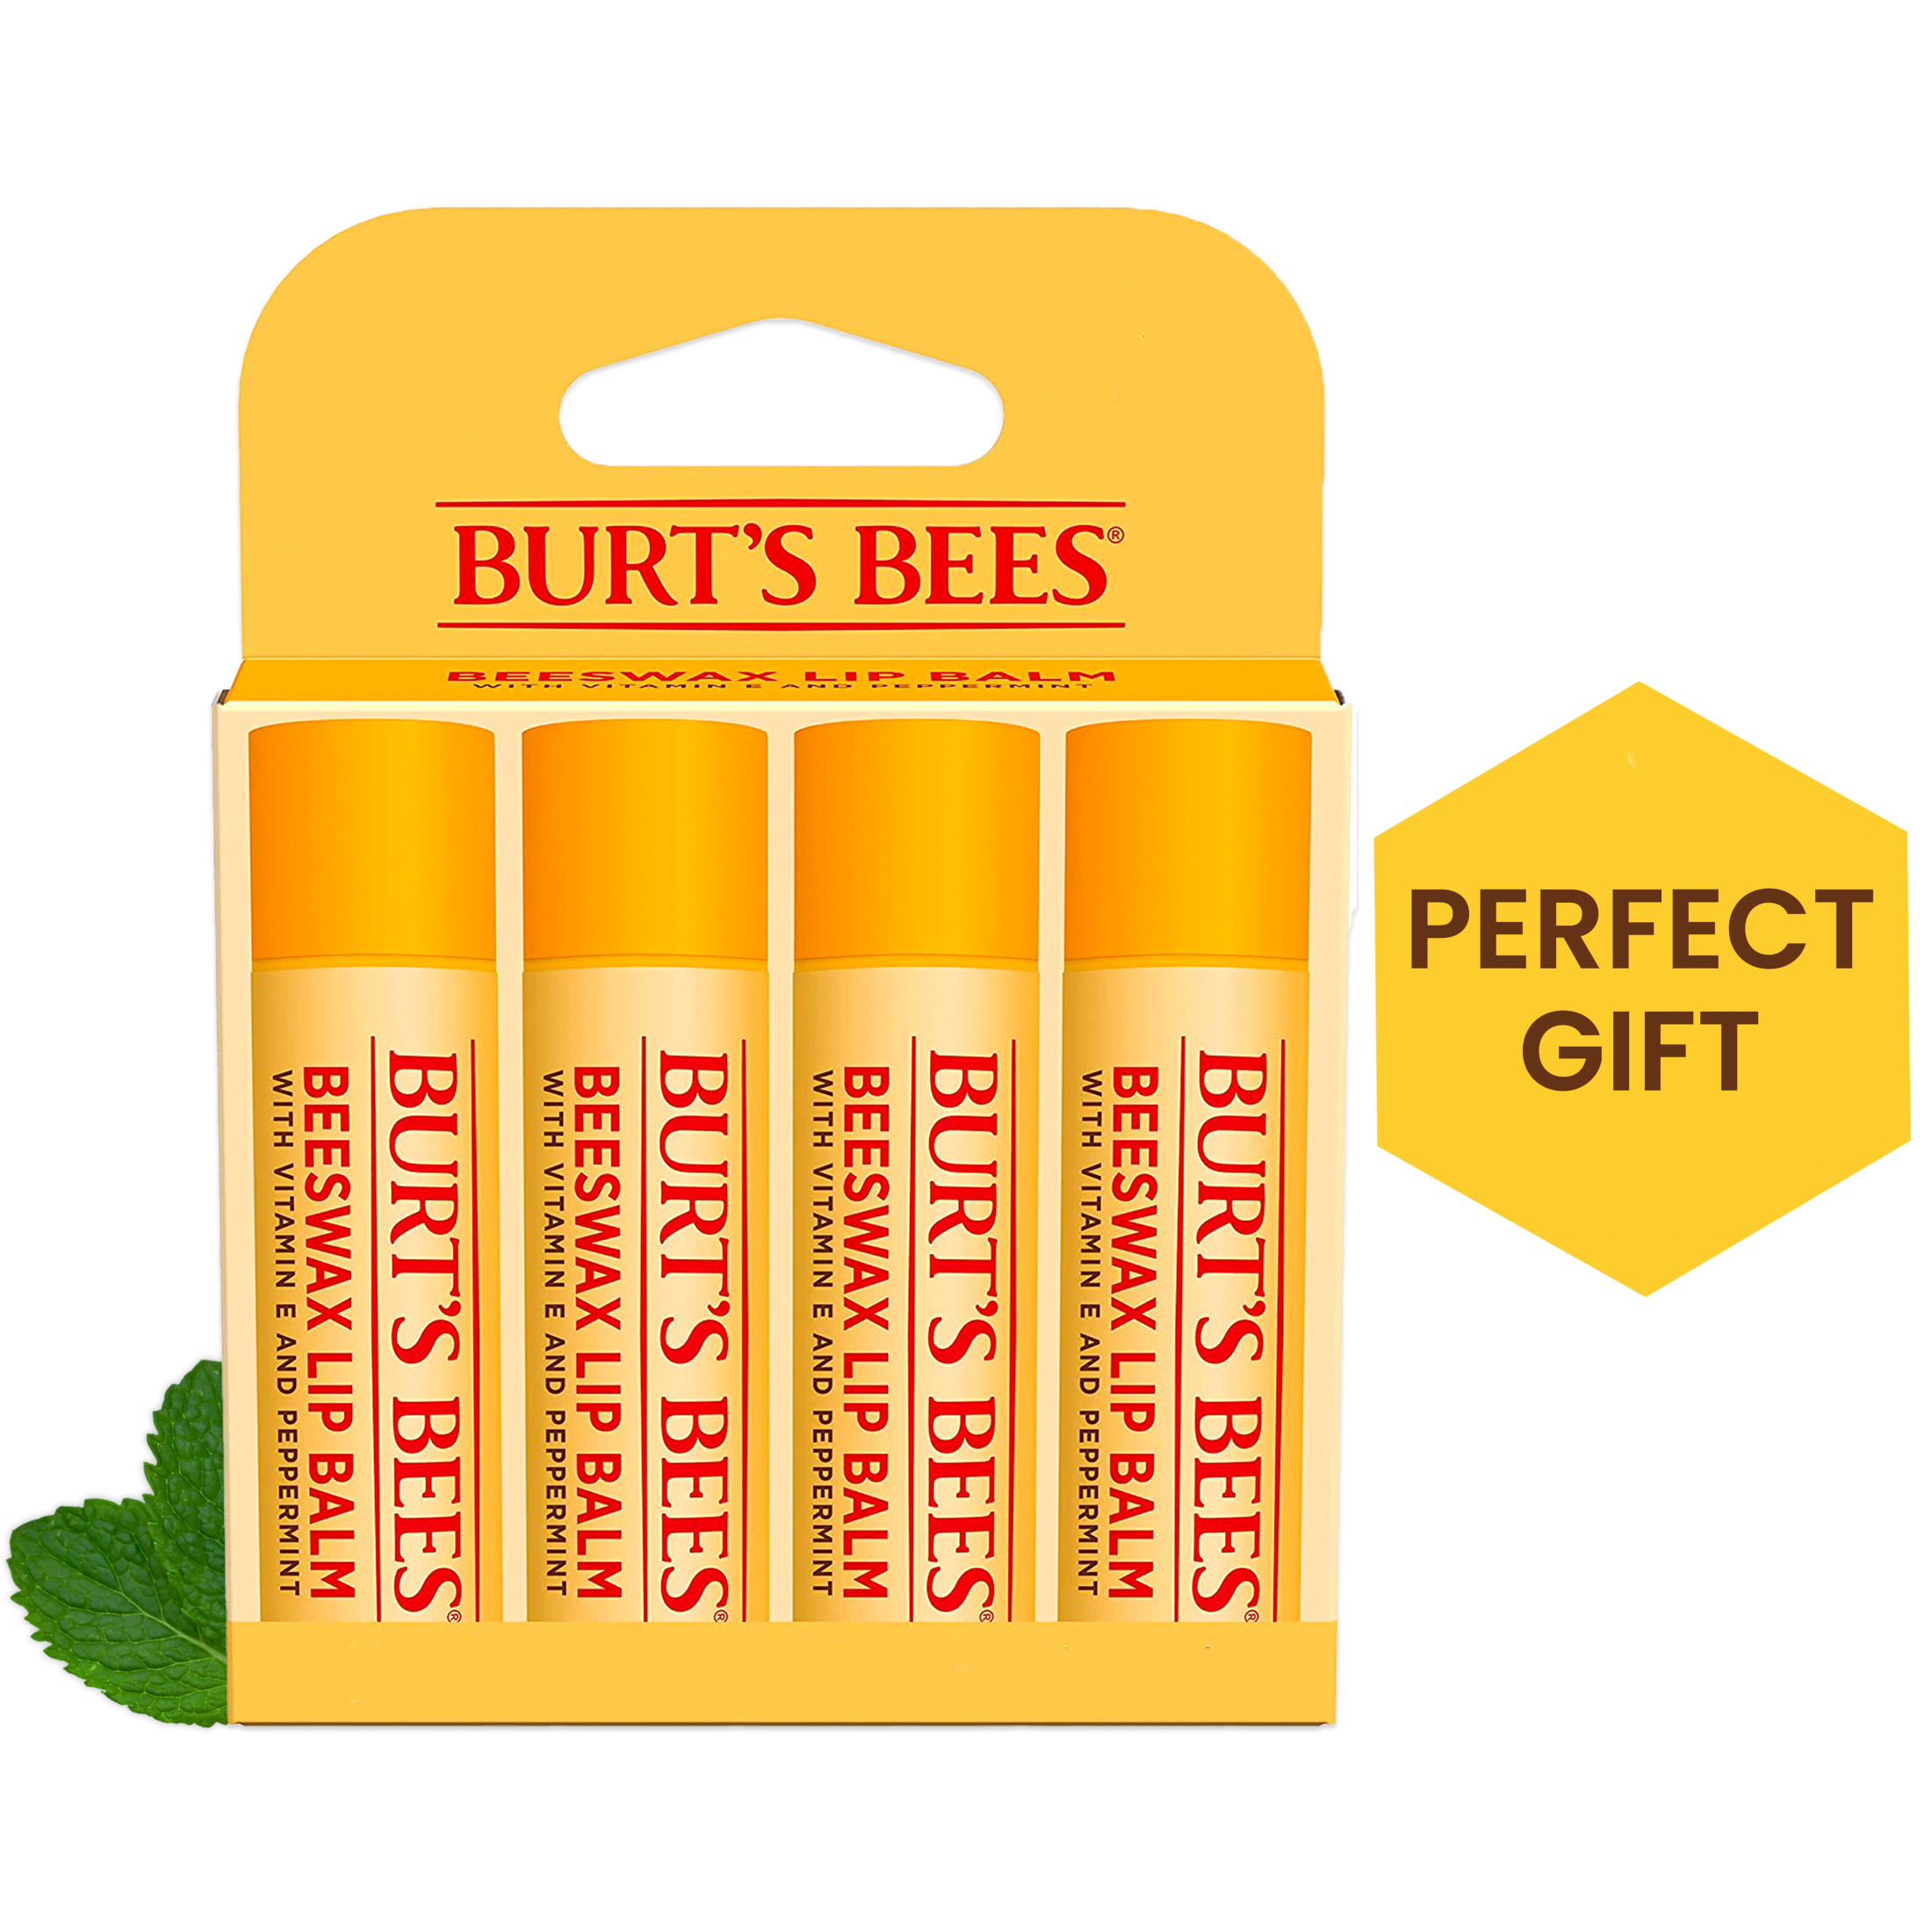 Burt's Bees Beeswax Lip Balm, 4-Pack, 0.15 oz. - image 1 of 11